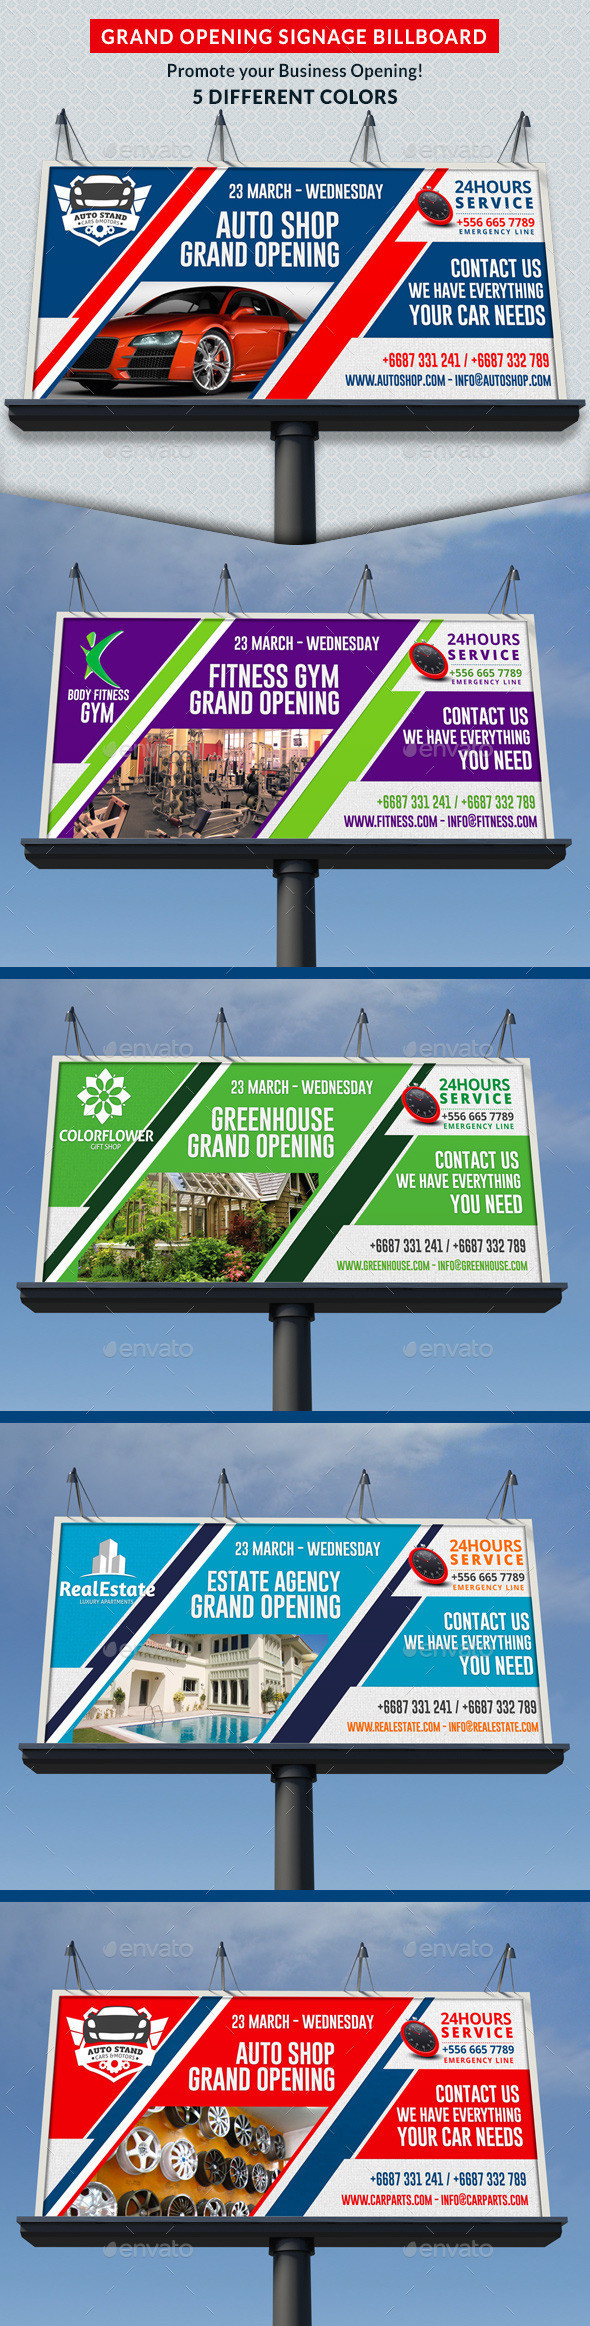 Sales services signage billboard showcase